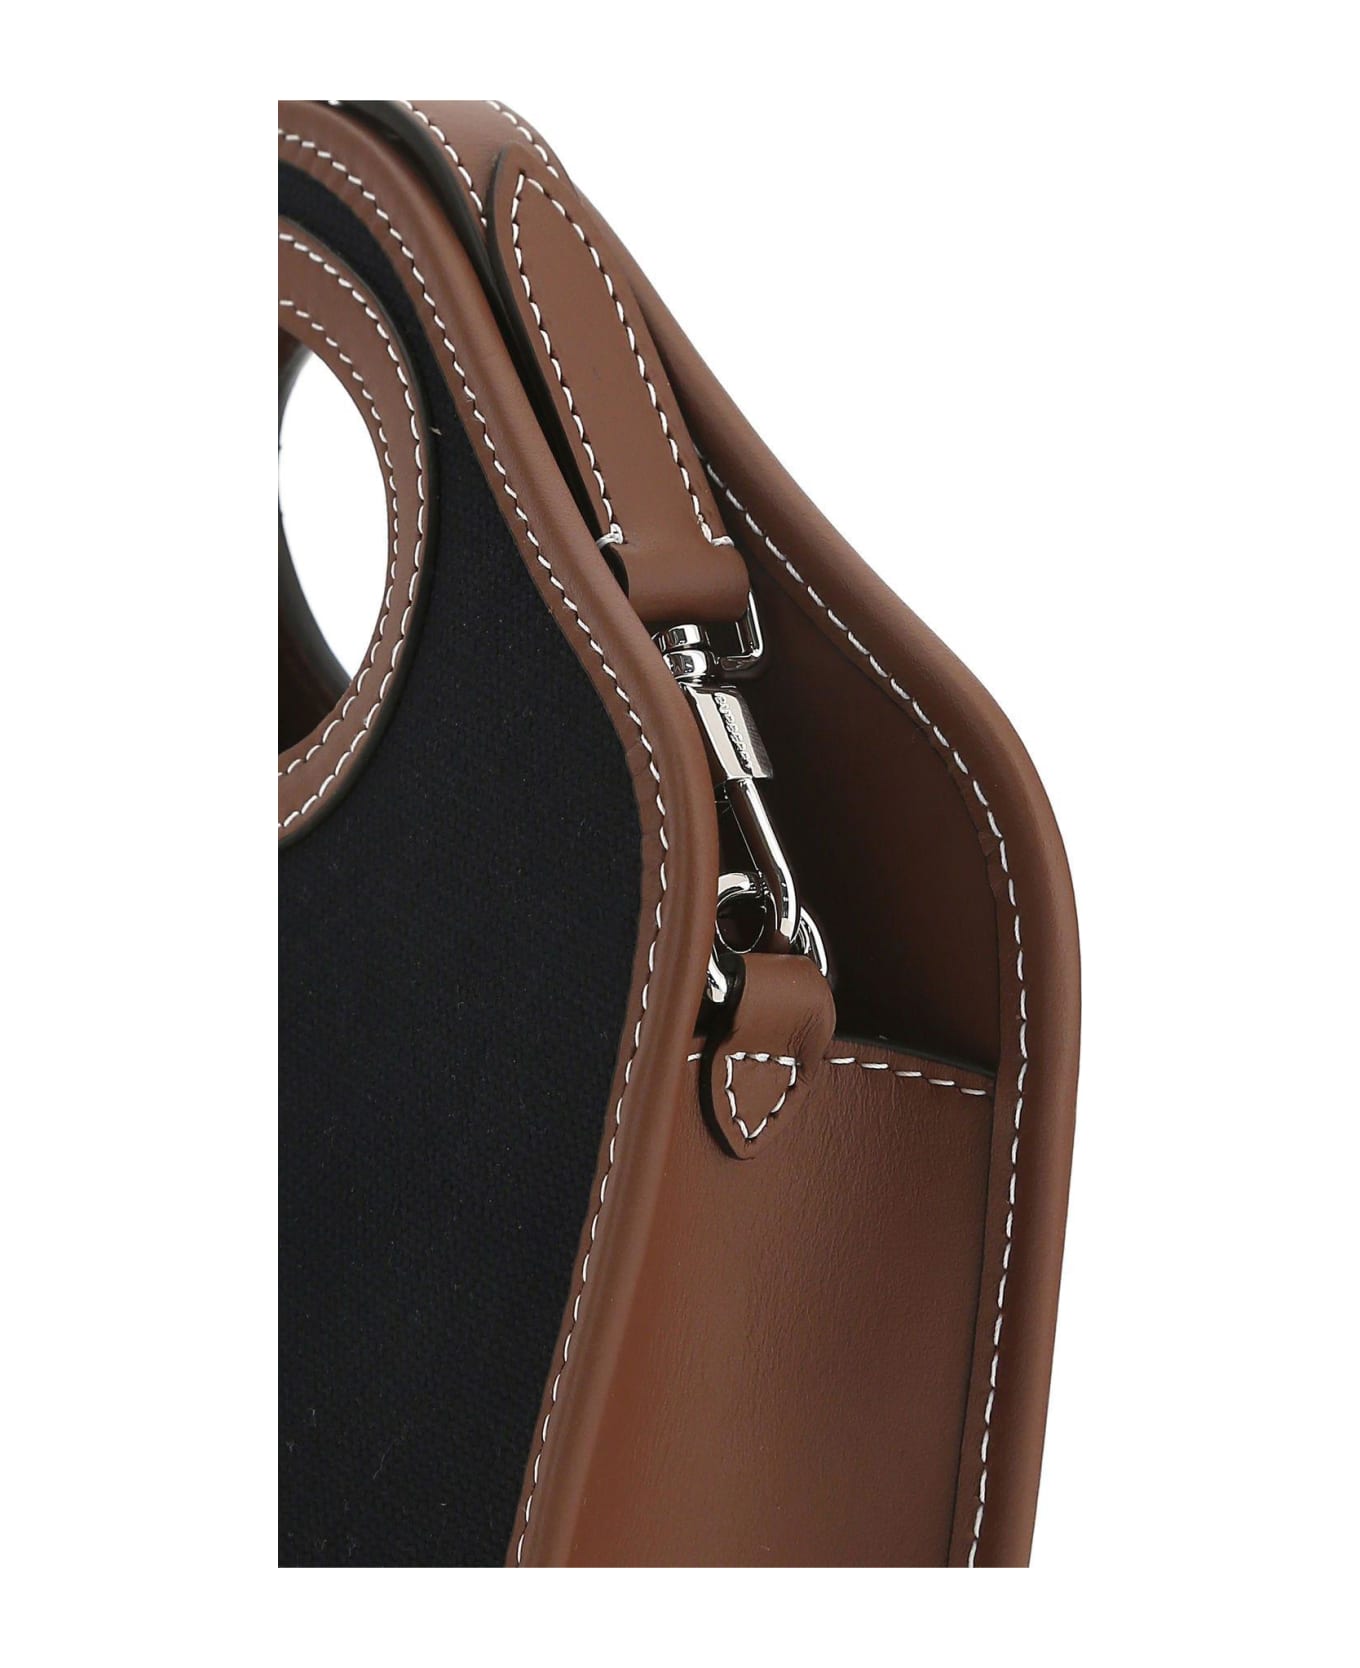 Burberry Two-tone Canvas And Leather Mini Pocket Handbag - BLACK/TAN トートバッグ